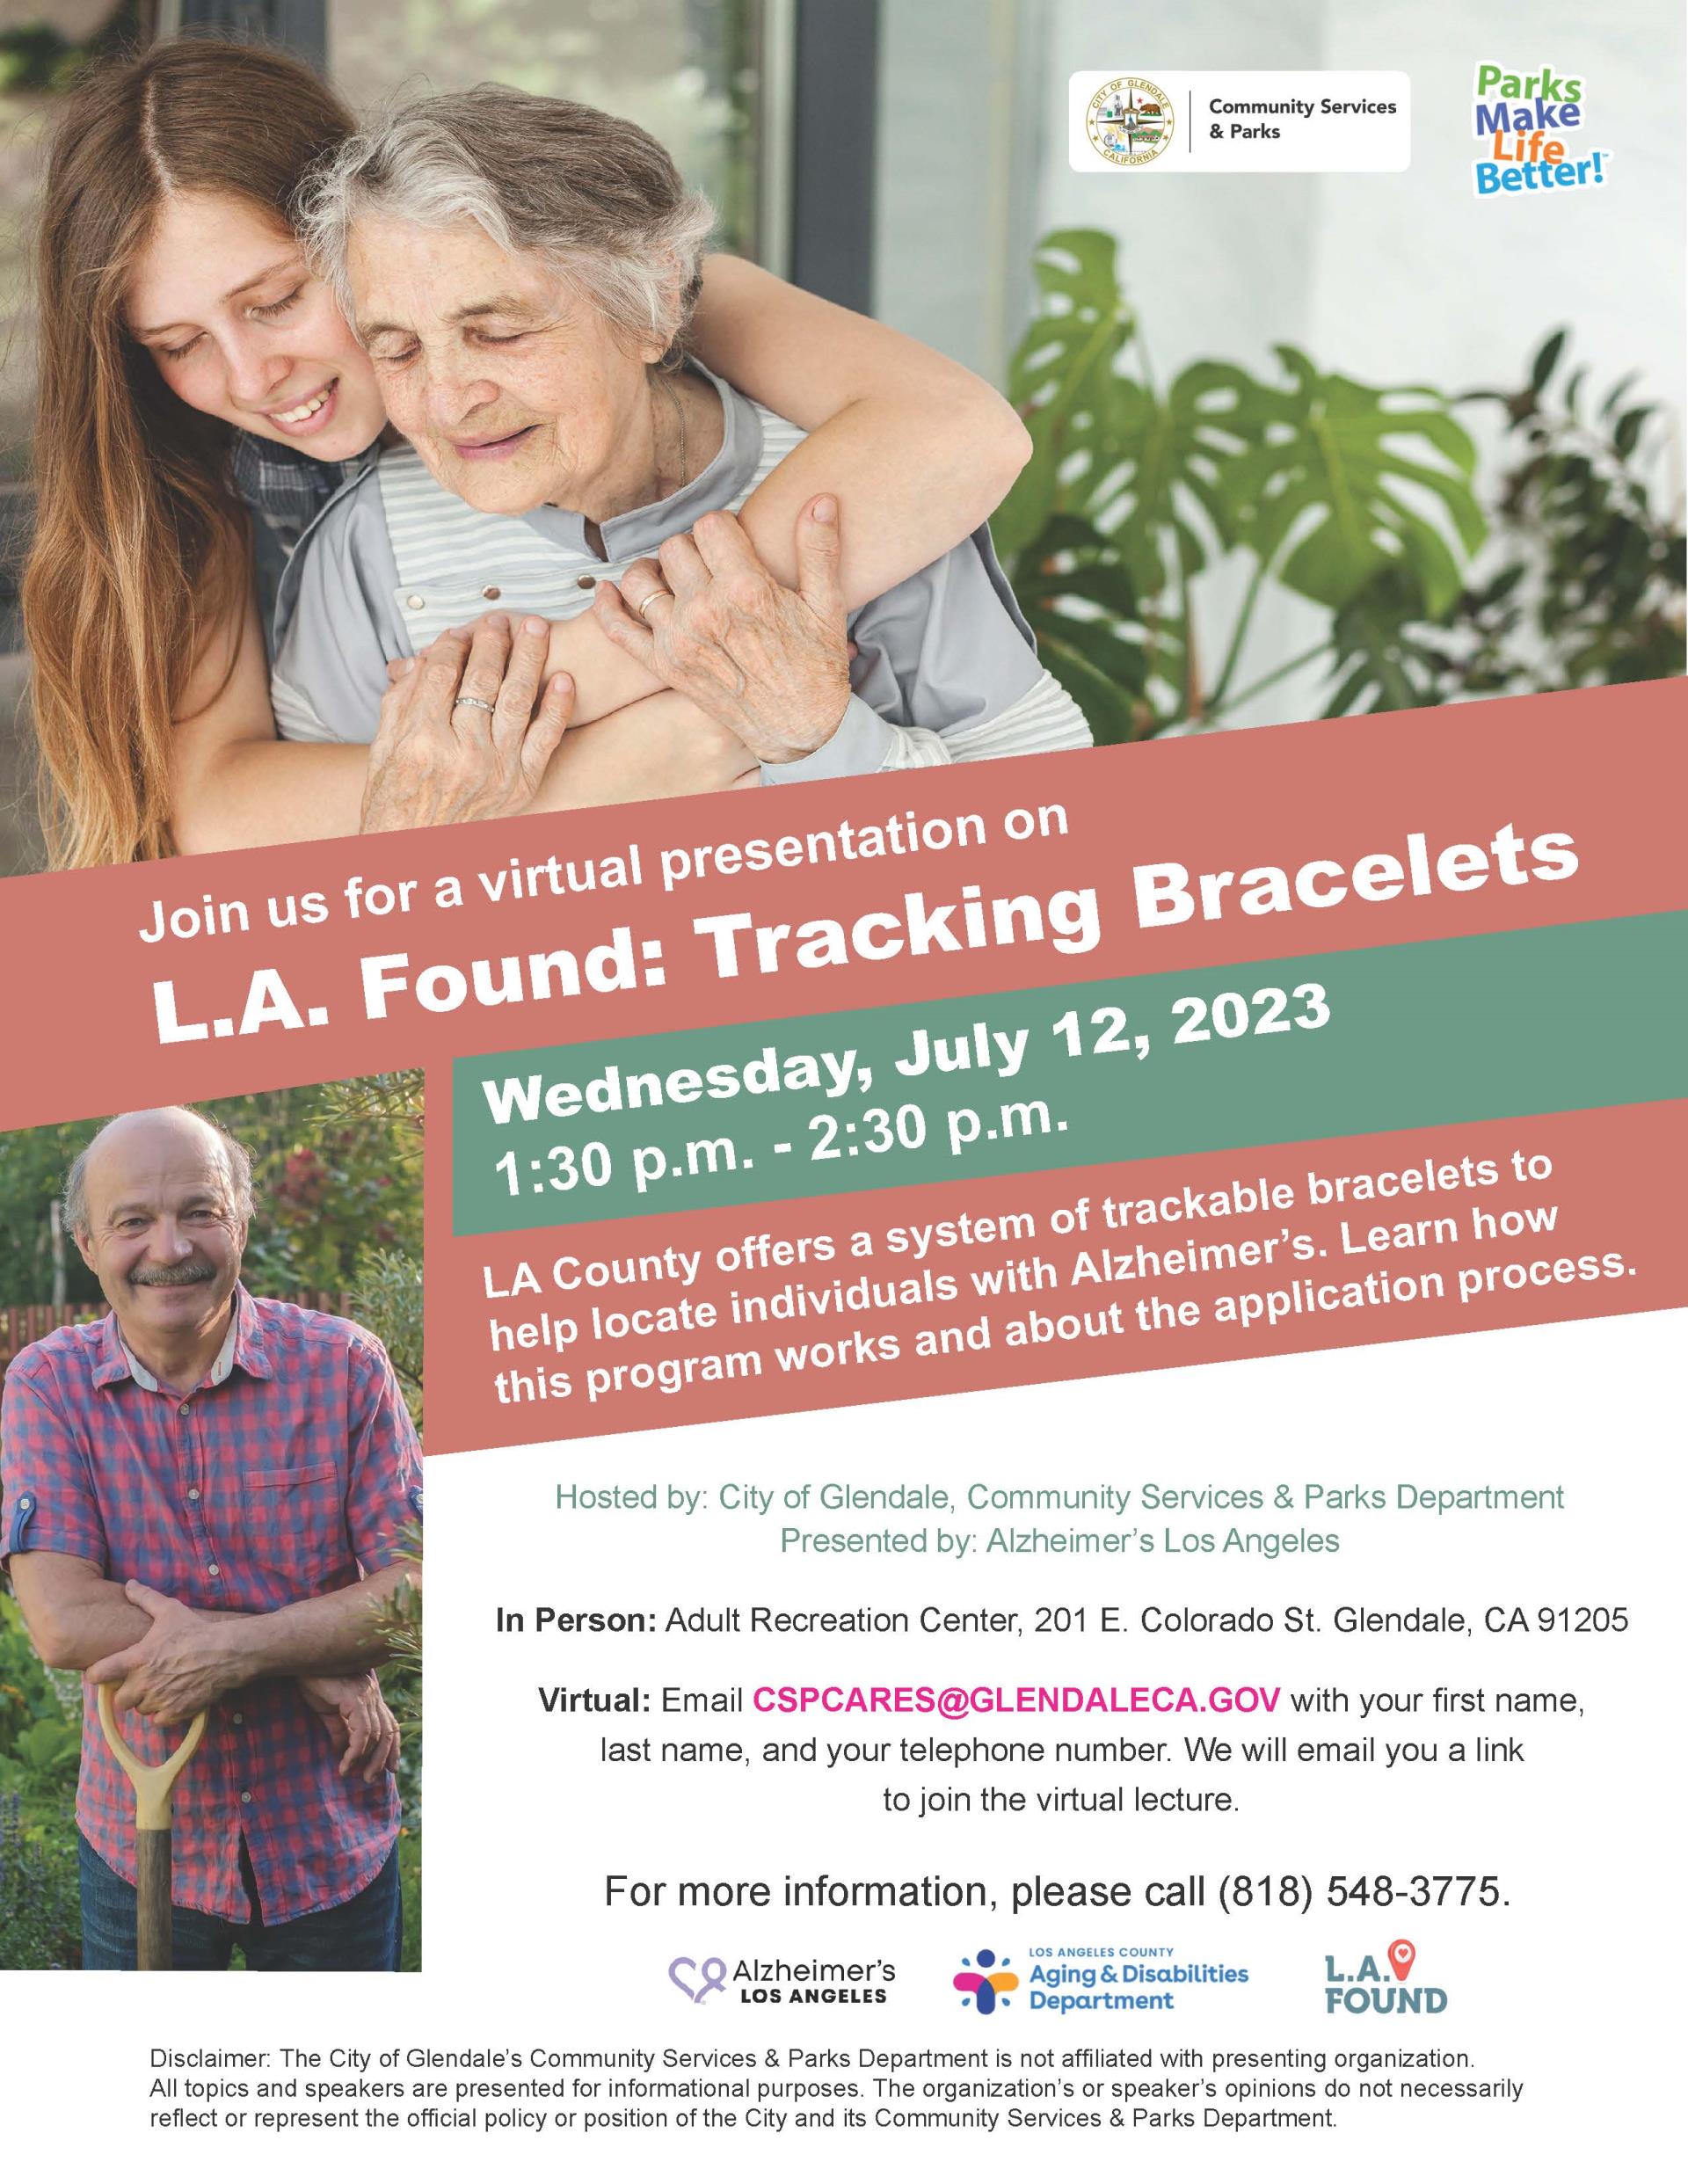 LA Found Tracking Bracelets